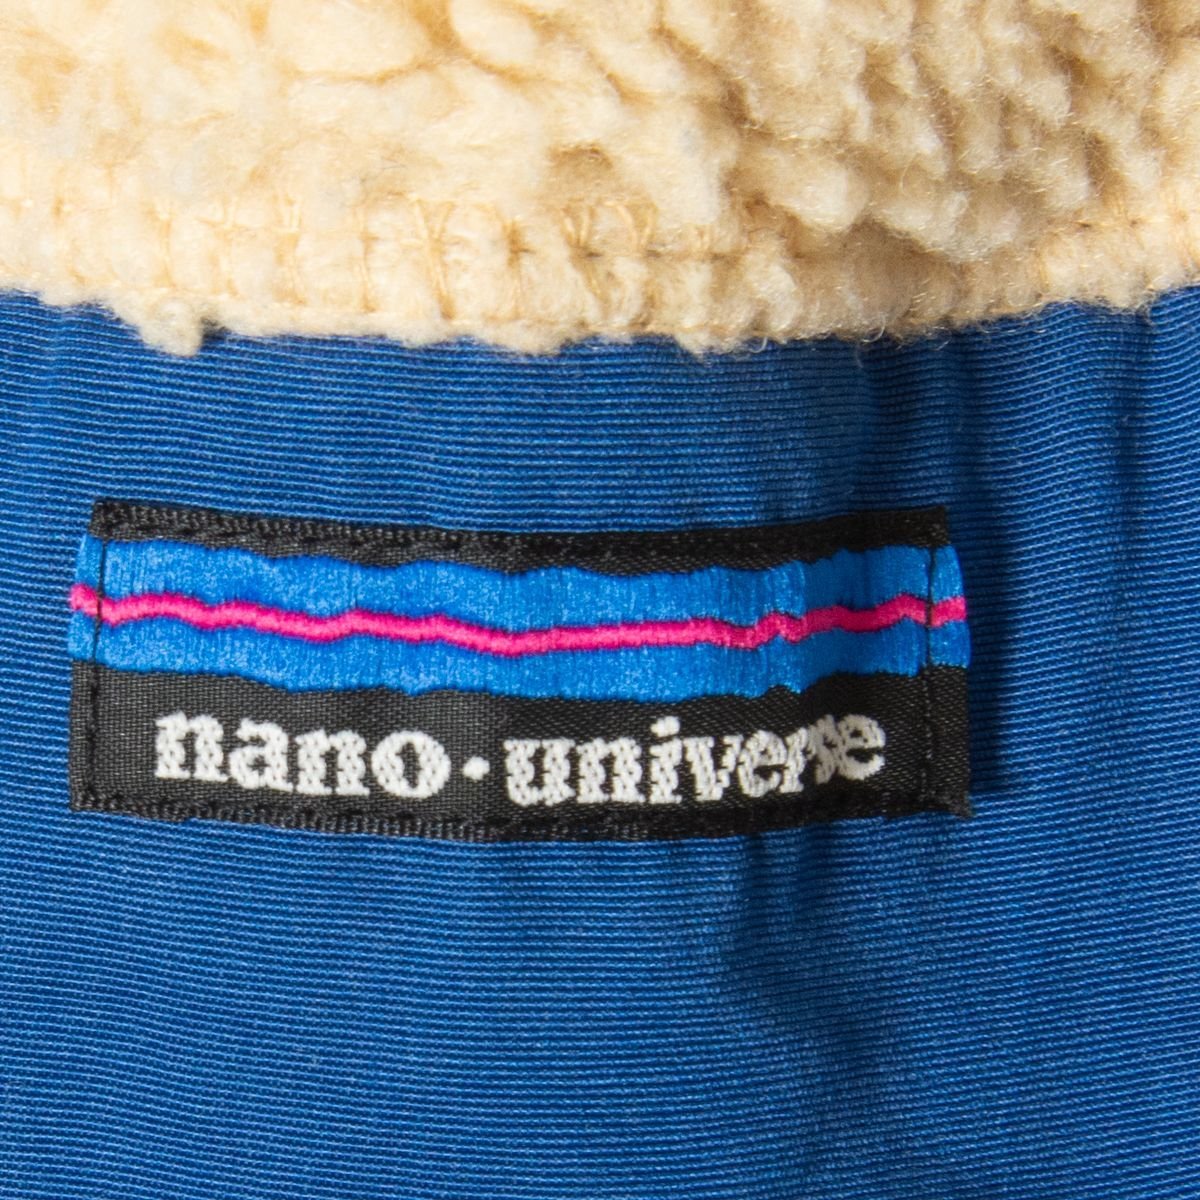 nano universe ナノユニバース サイズM ジャケット ジップアップ フード ライナー付 裏ボア 青/ブルー コットン混 アウトドア 古着 秋冬_画像8